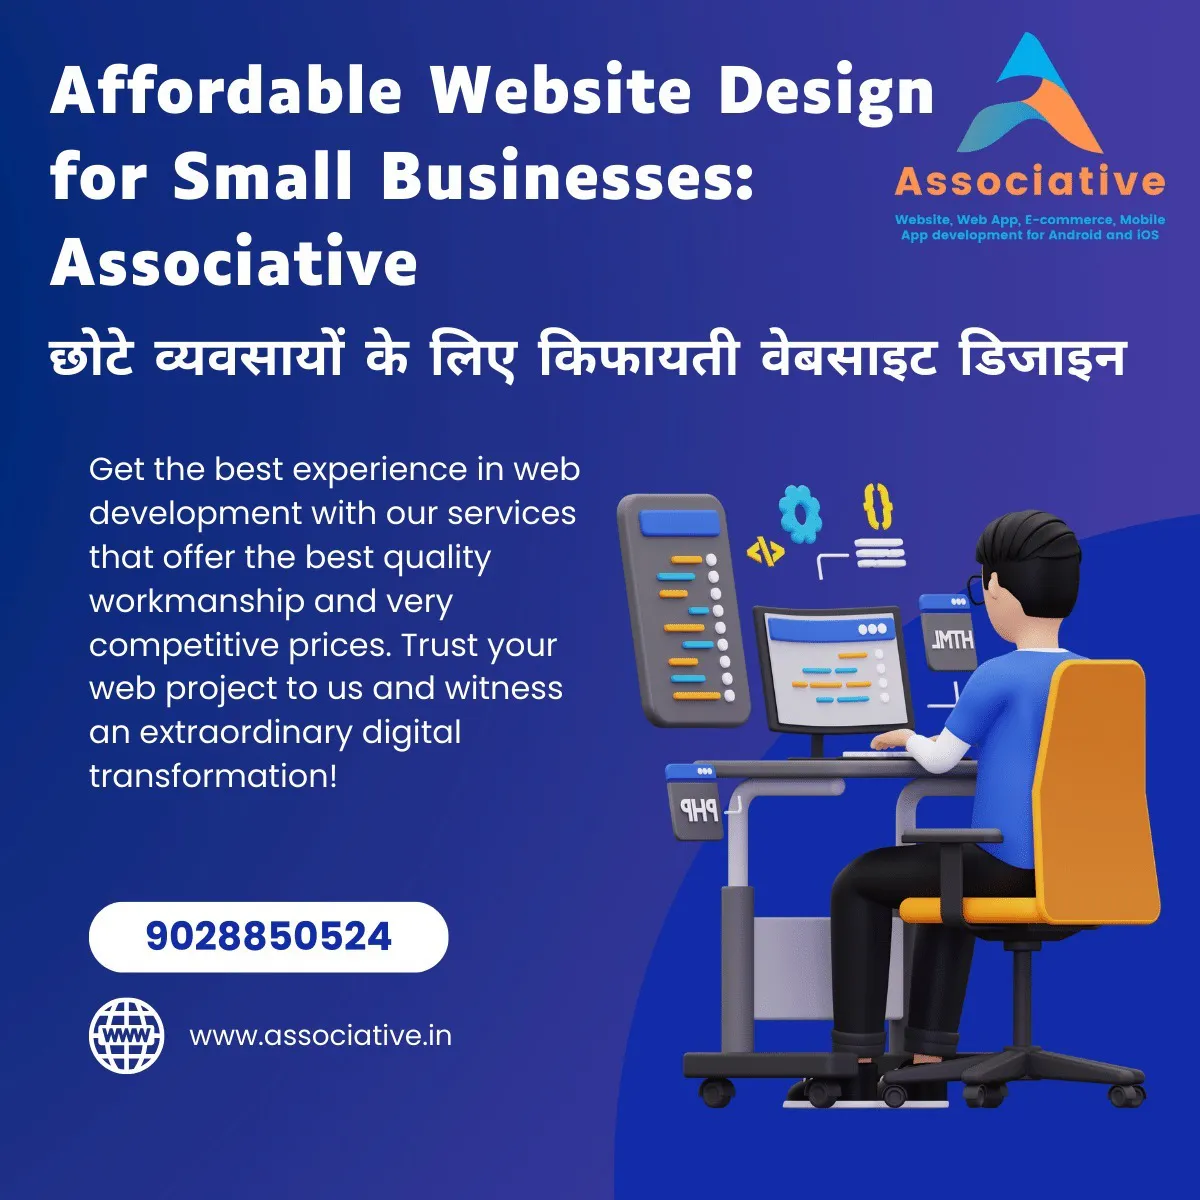 Affordable Website Design for Small Businesses: Associative